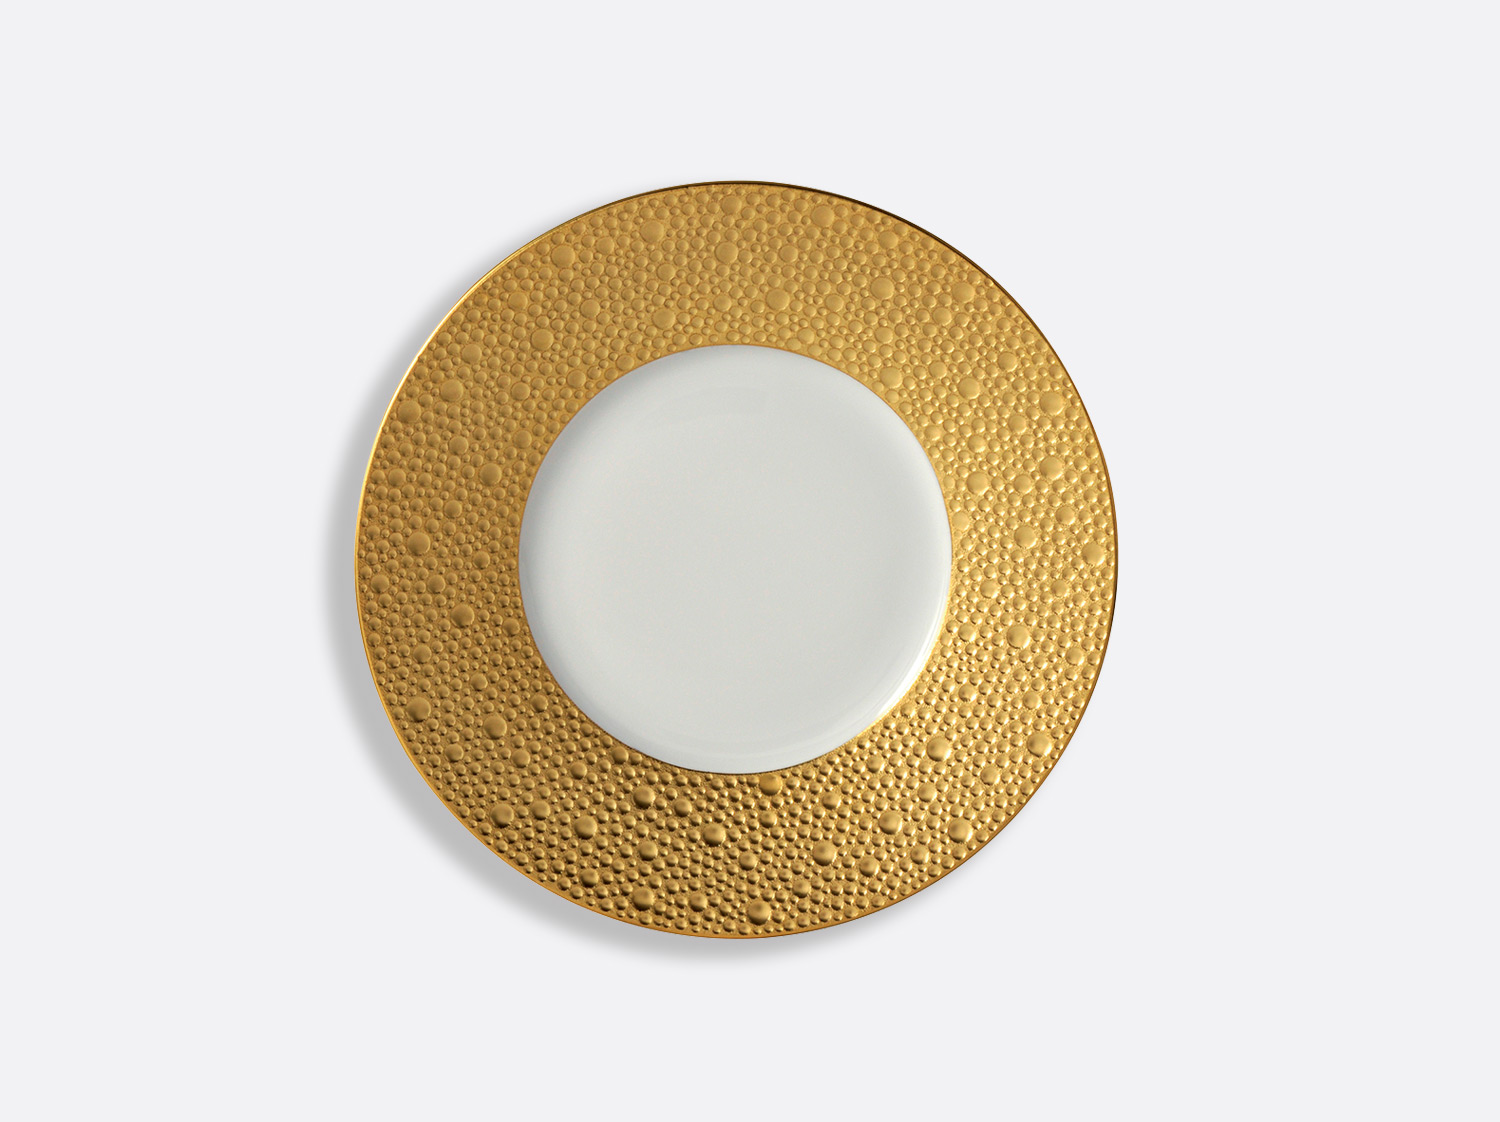 China Plate 6.5" of the collection Ecume gold | Bernardaud